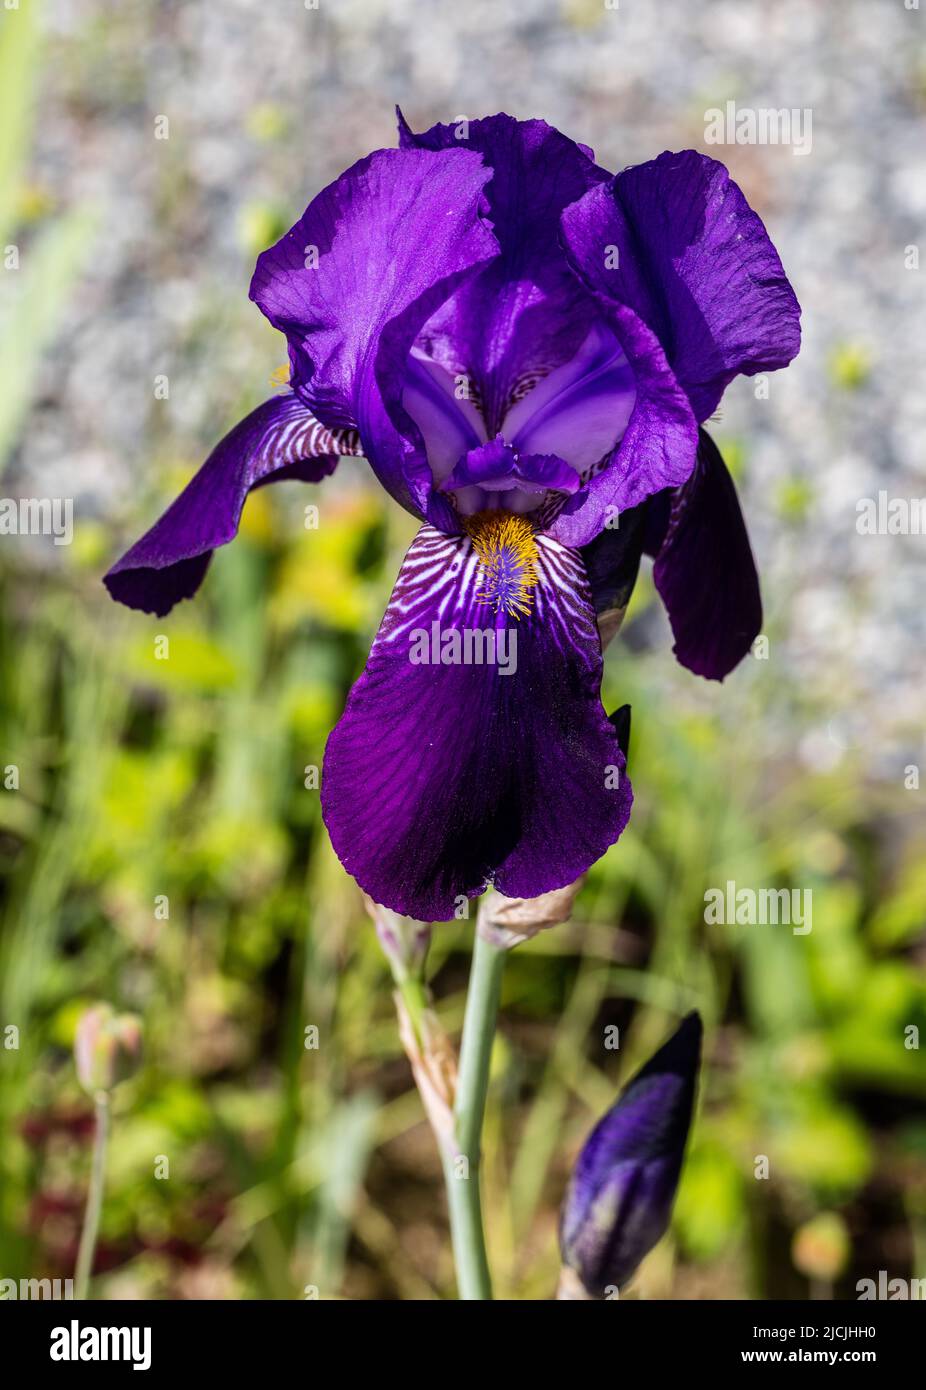 'Joanna' Tall Bearded Iris, Tyskiris (Iris germanica) Stock Photo